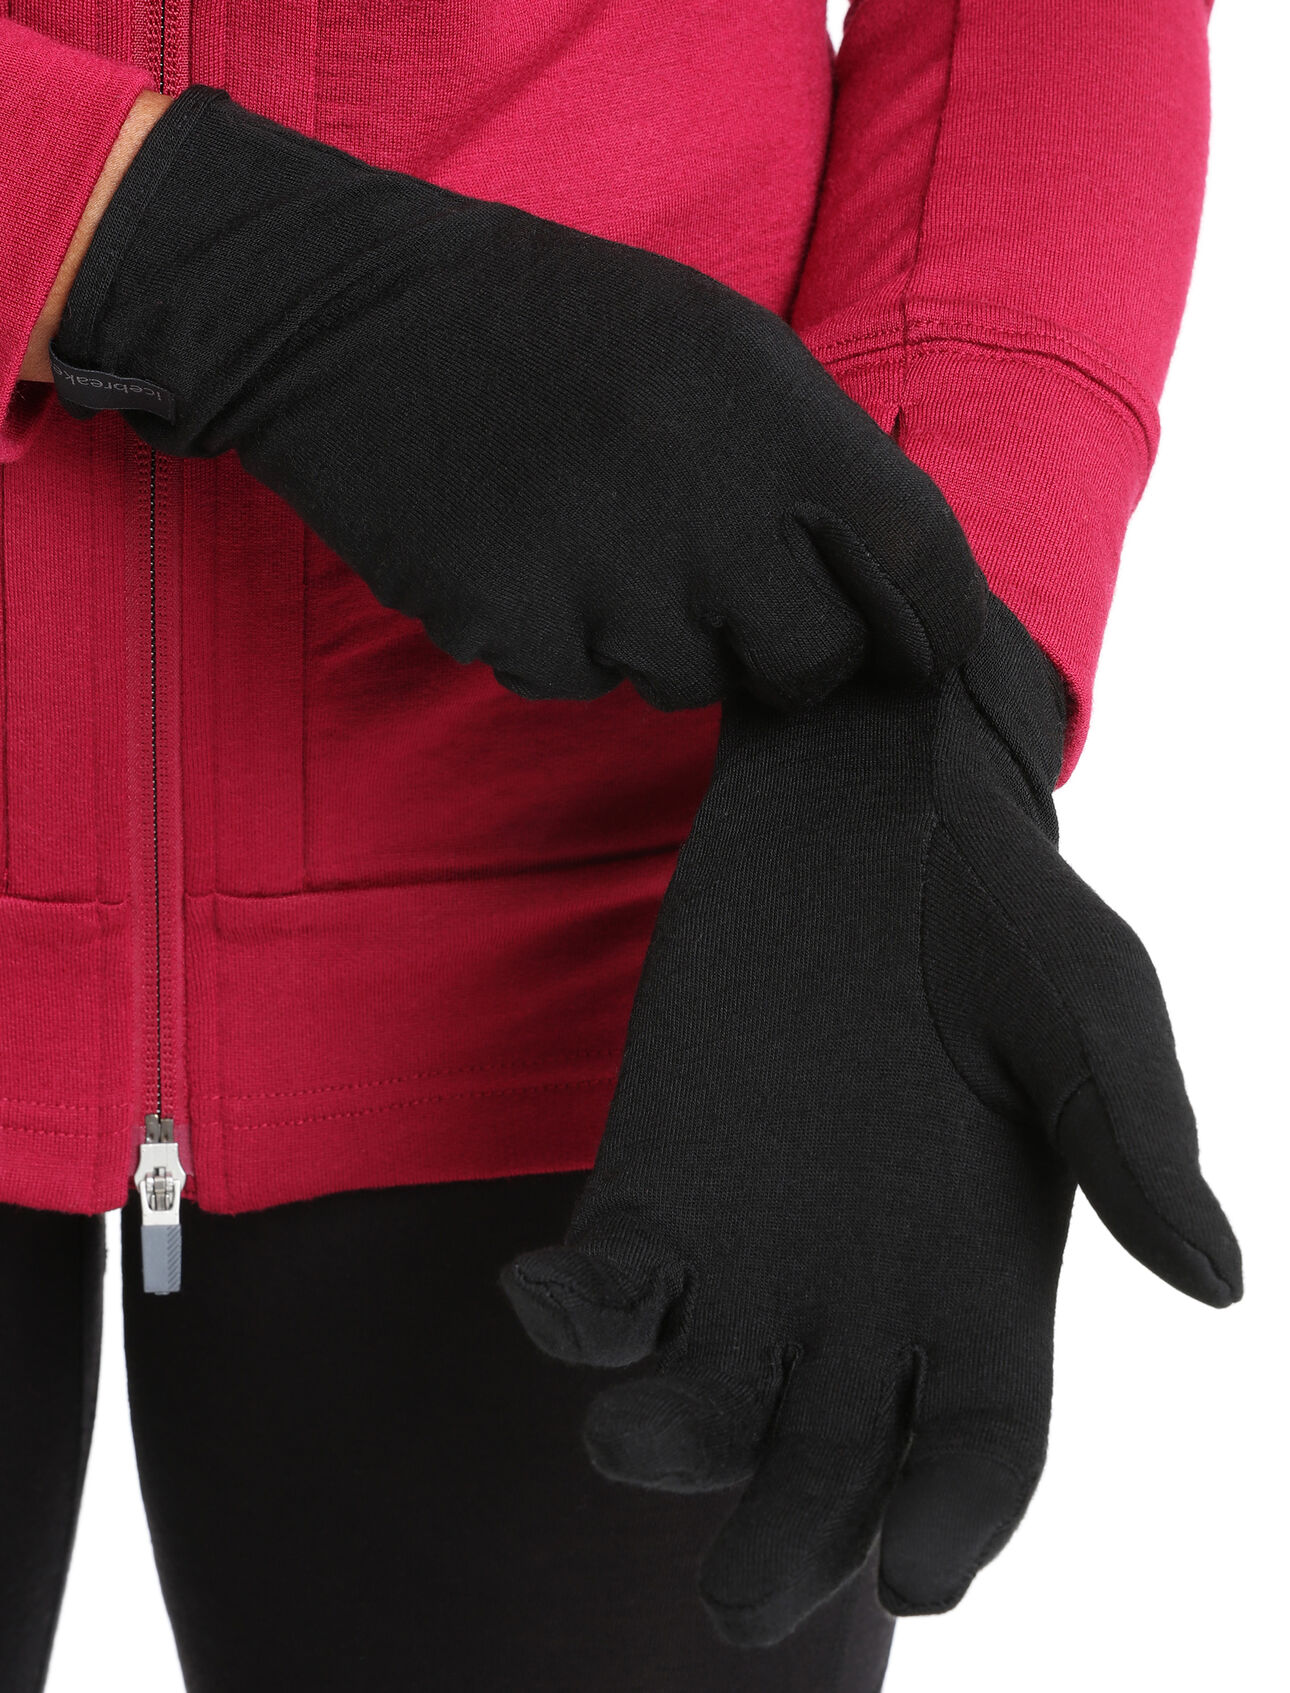 Sous-gants de ski - Sous-gants Lightweight Whool Tech